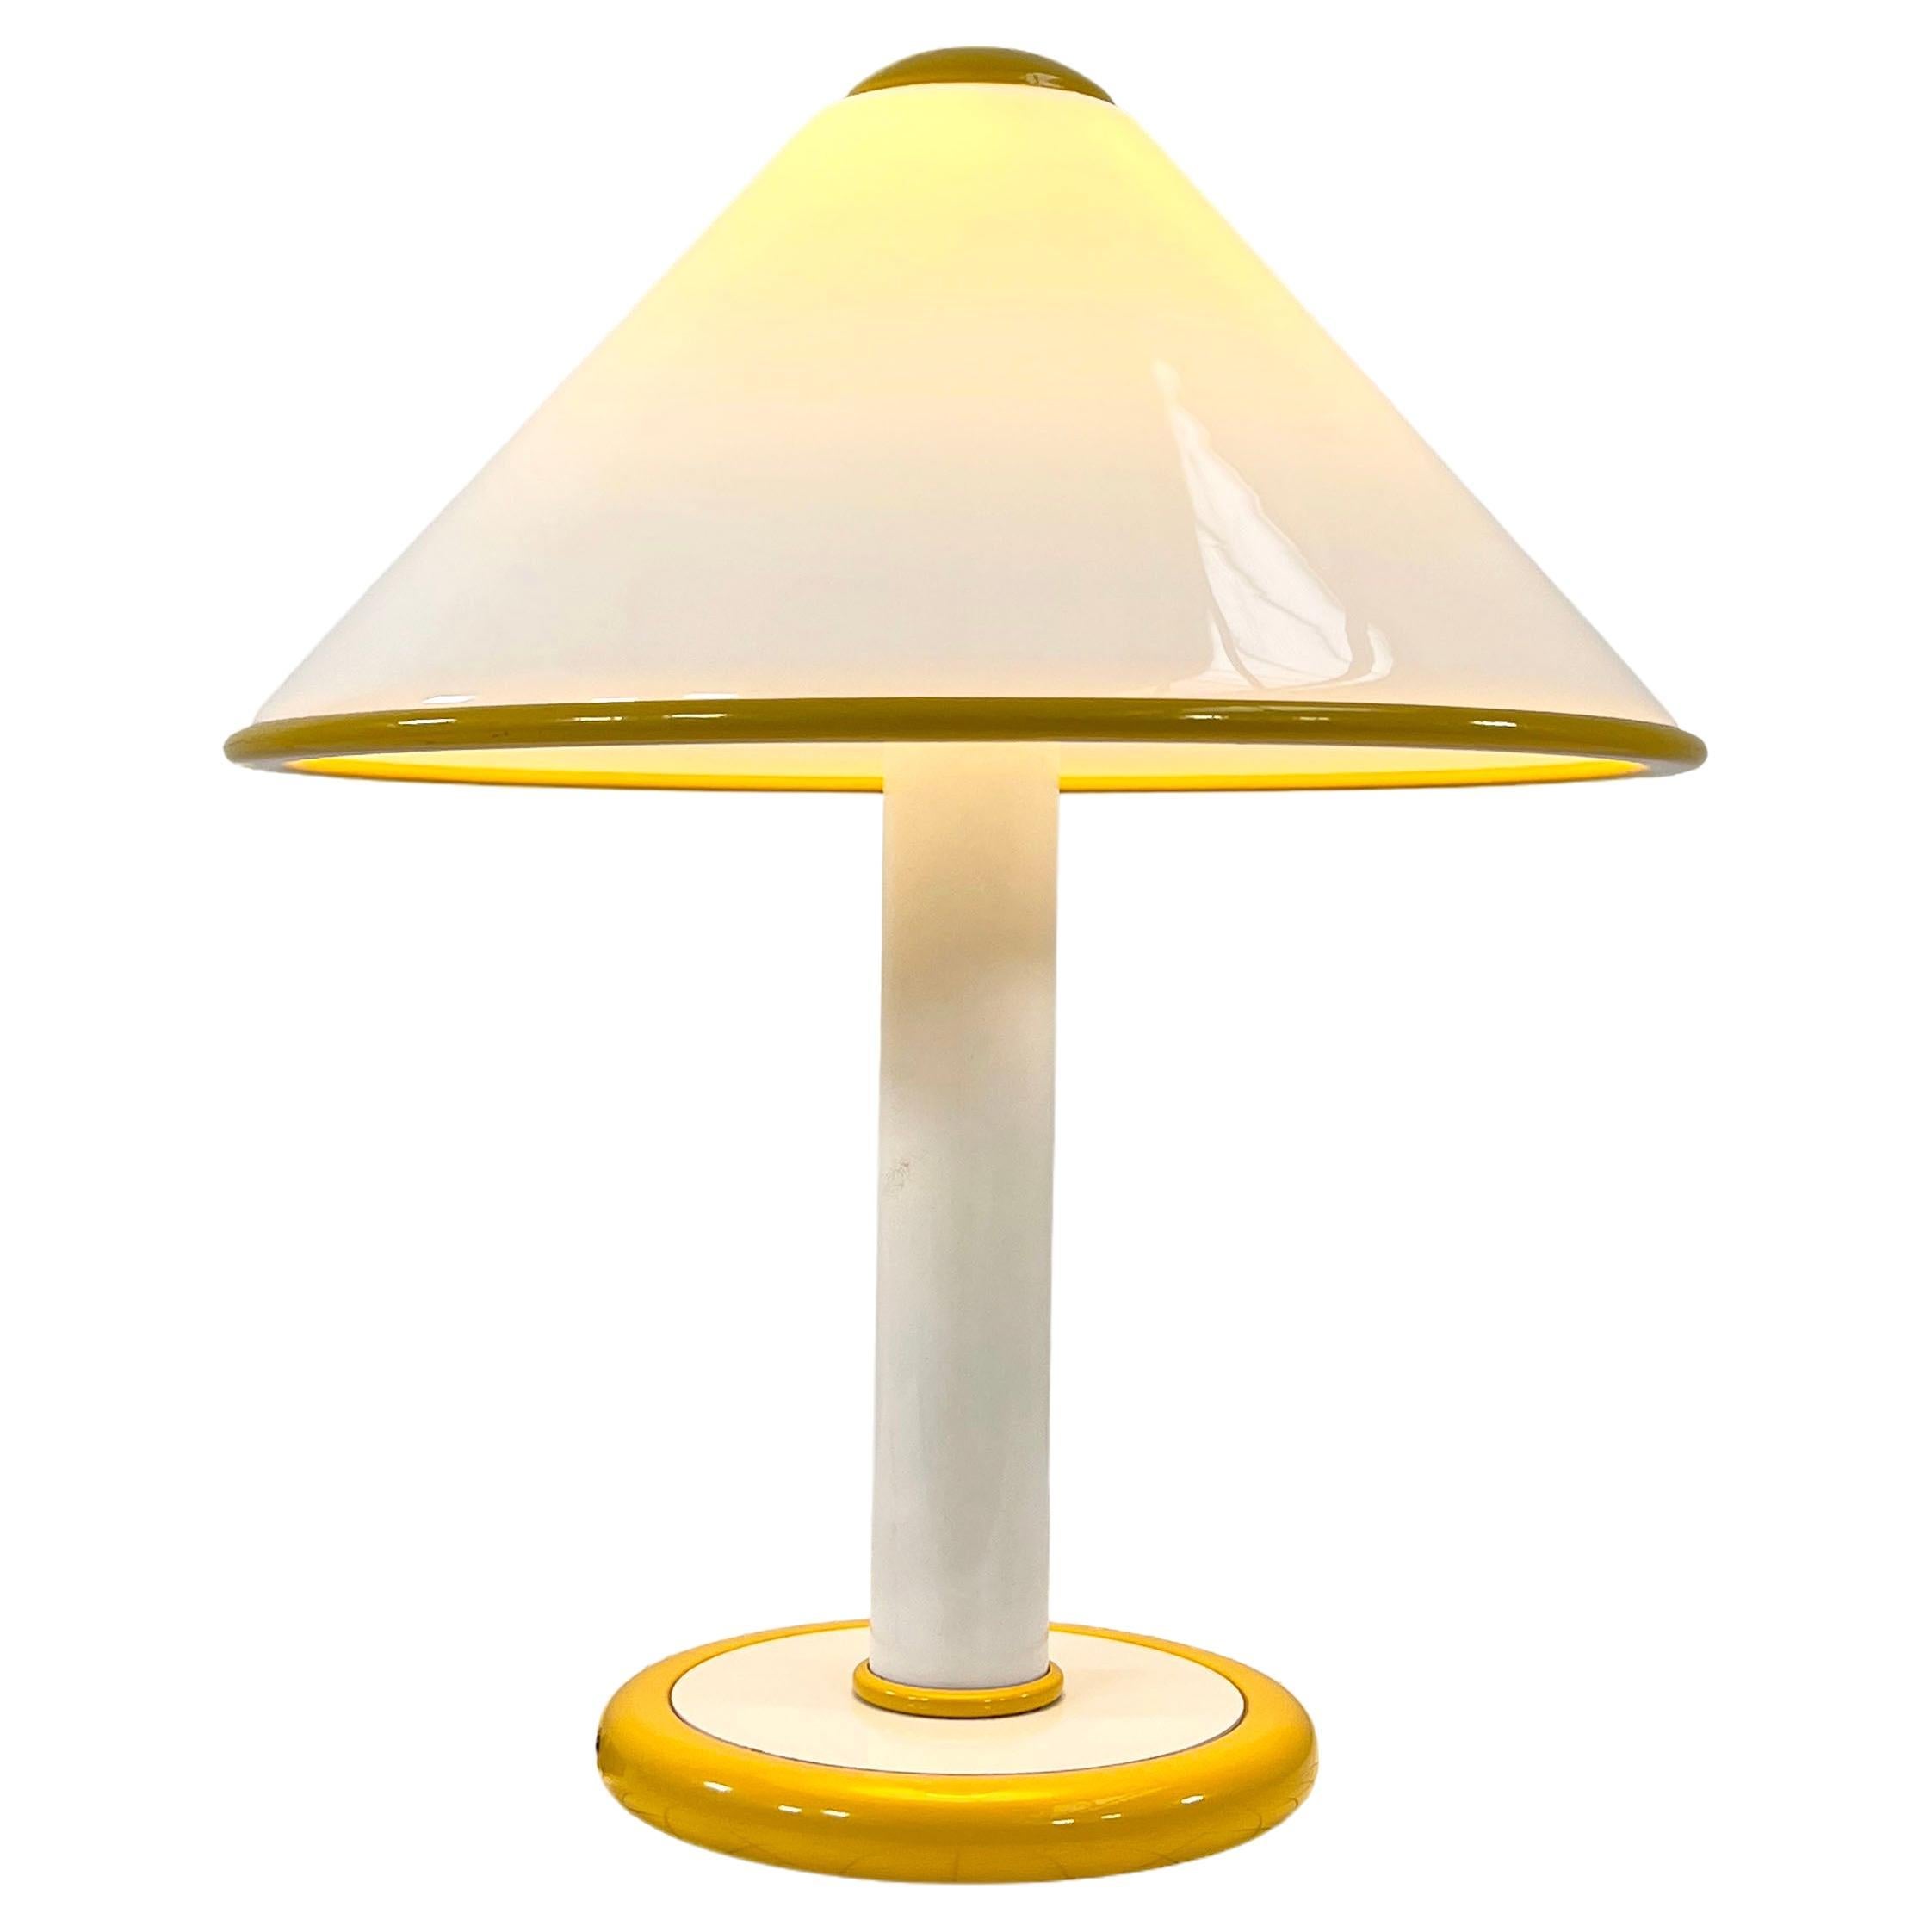 Yellow Mushroom Table Lamp in Murano Glass from F. Fabbian, 1980s